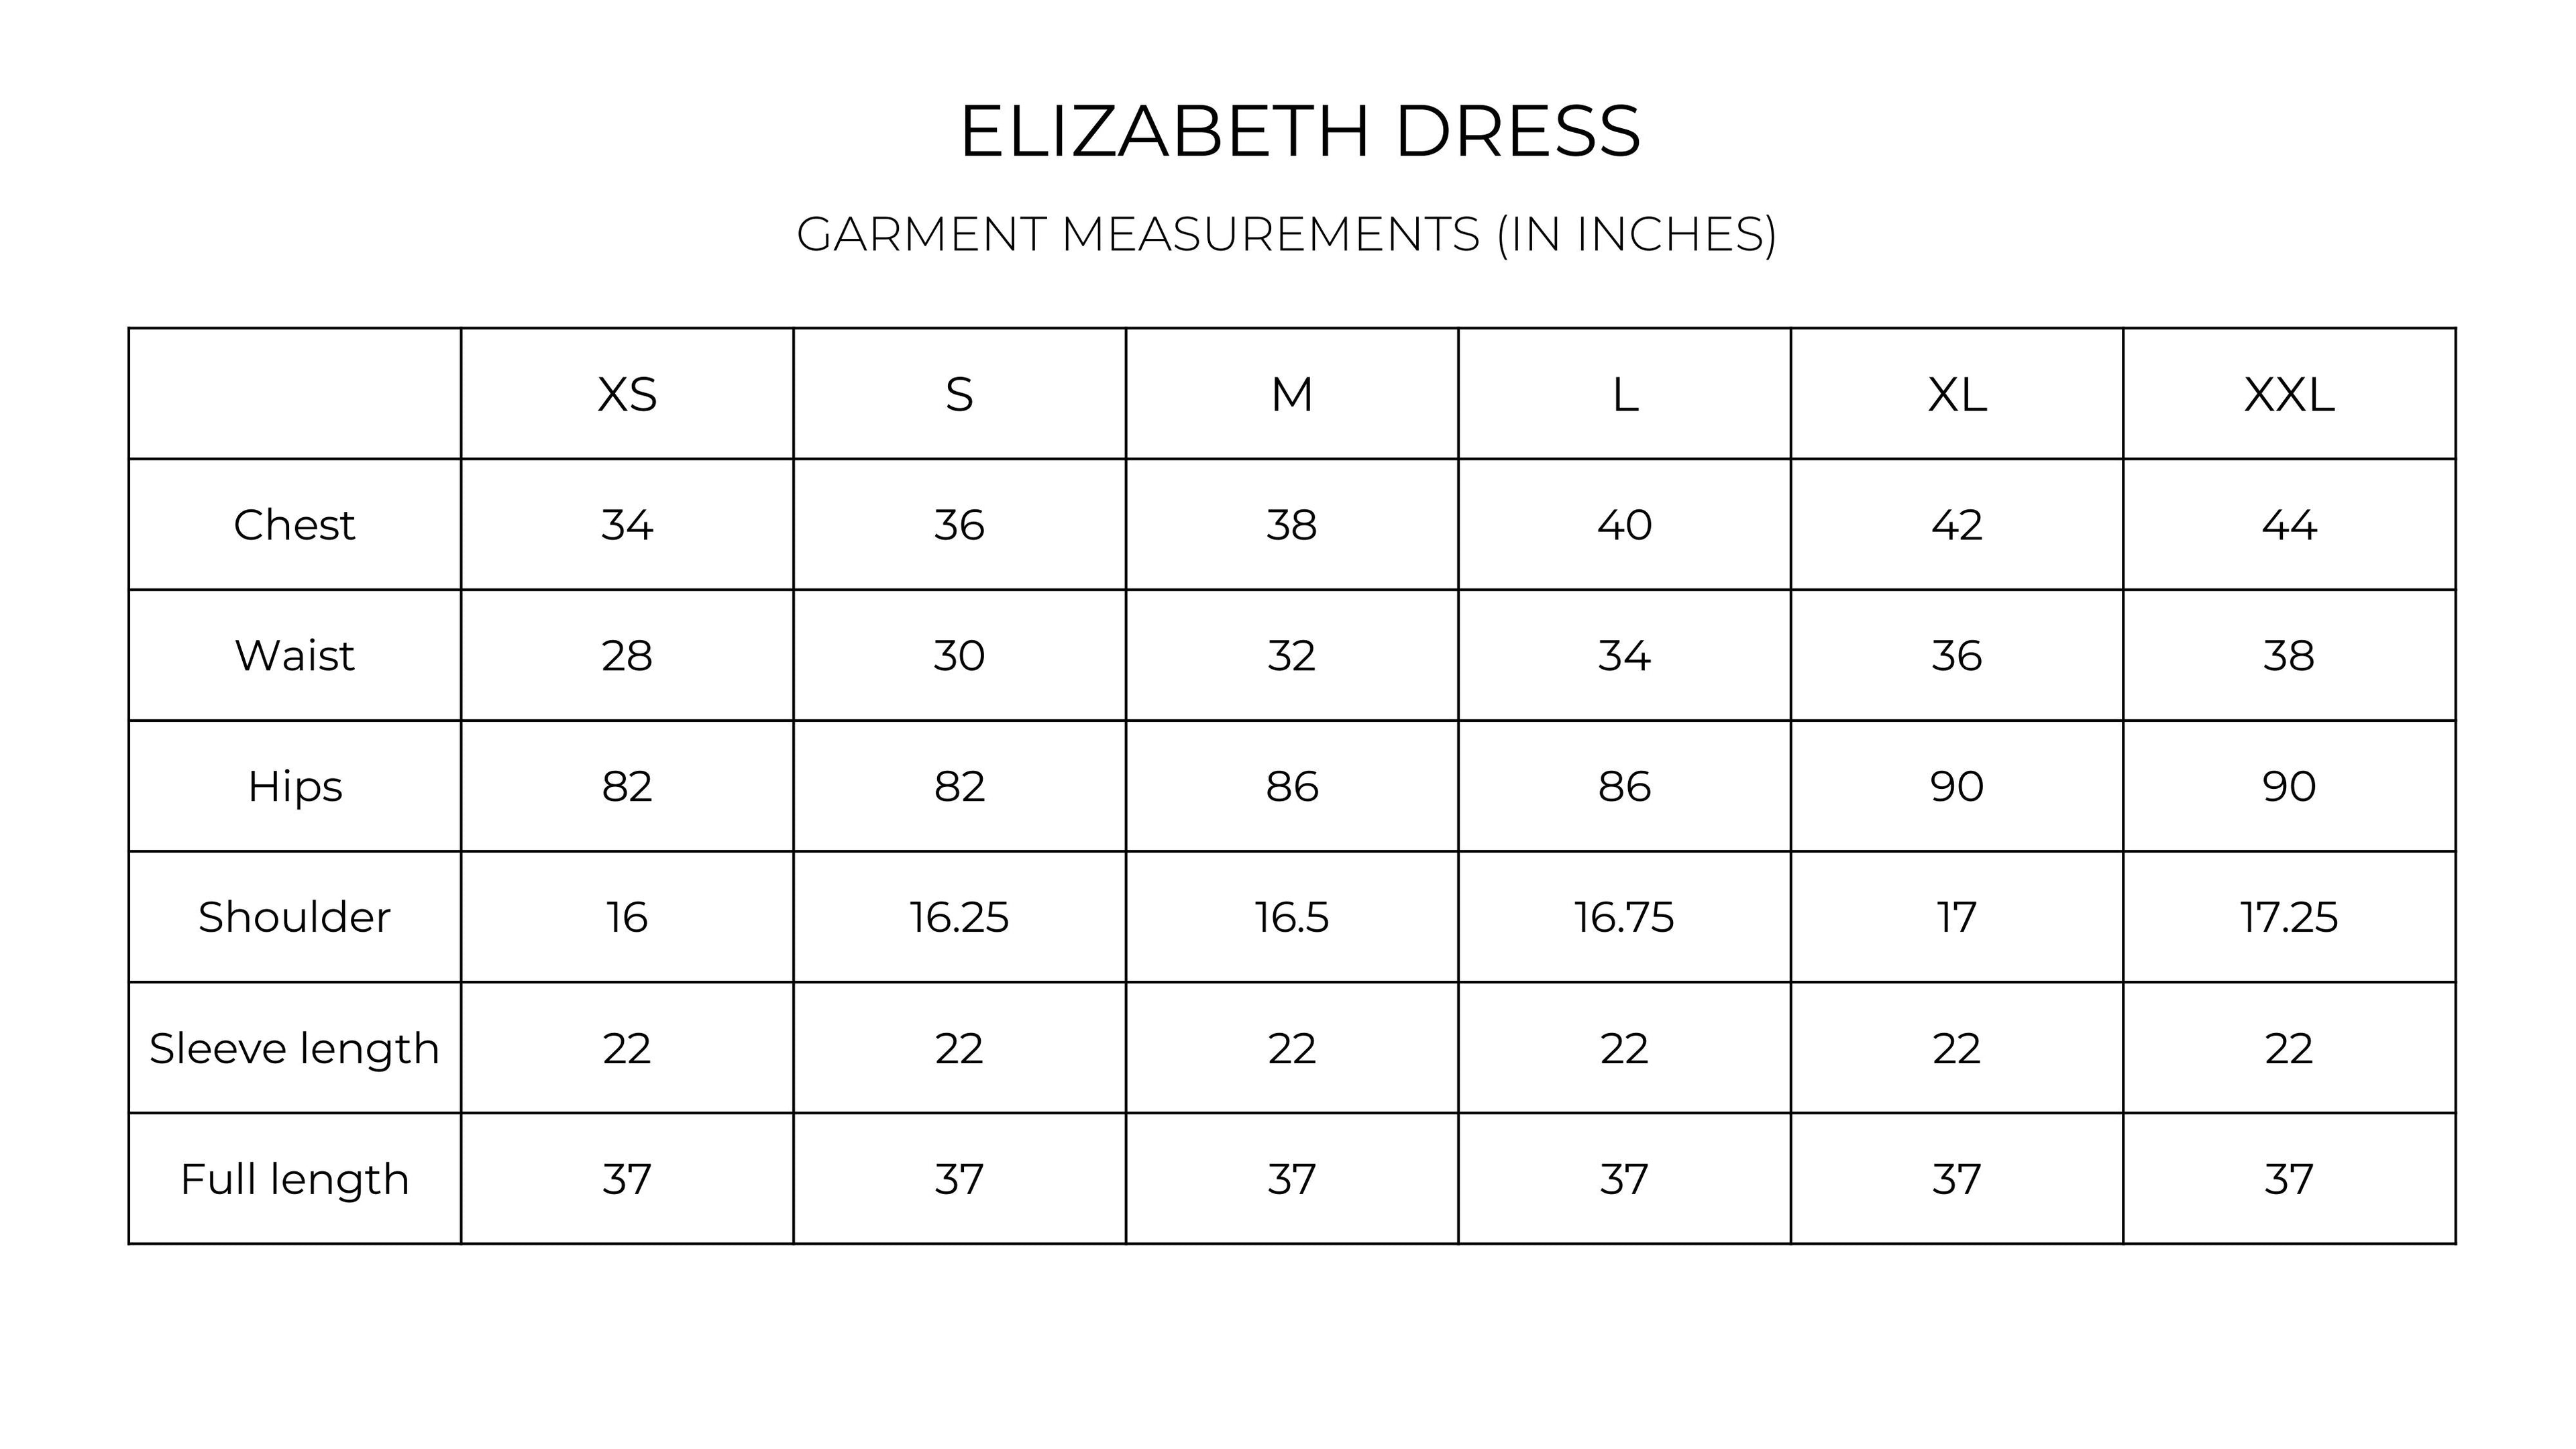 Elizabeth dress